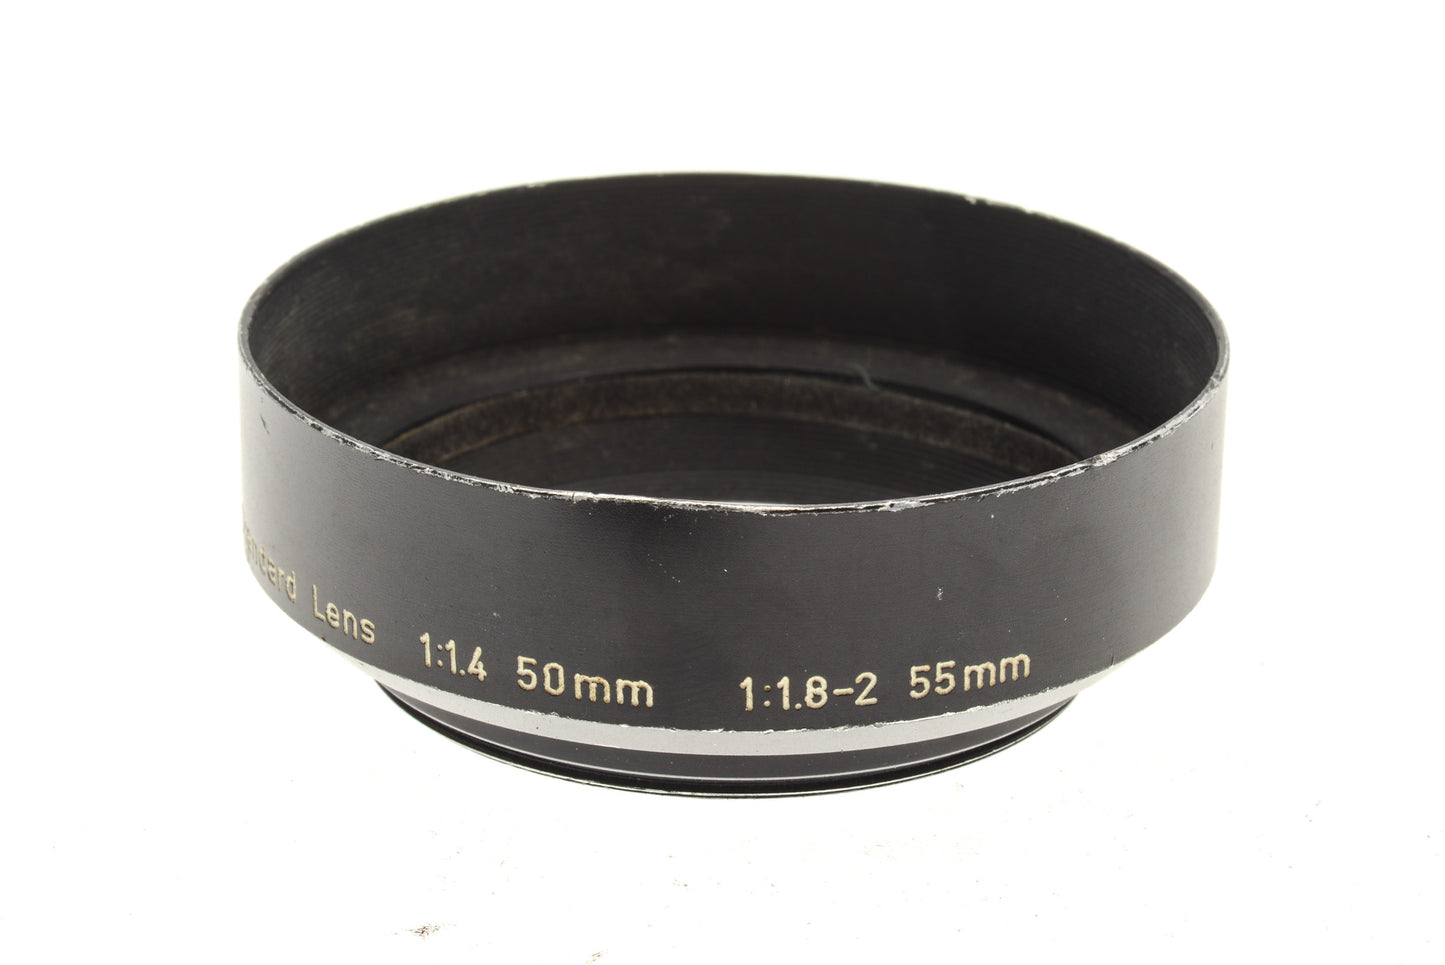 Pentax 49mm Lens Hood For 50mm f1.4 & 55mm f1.8-2 - Accessory